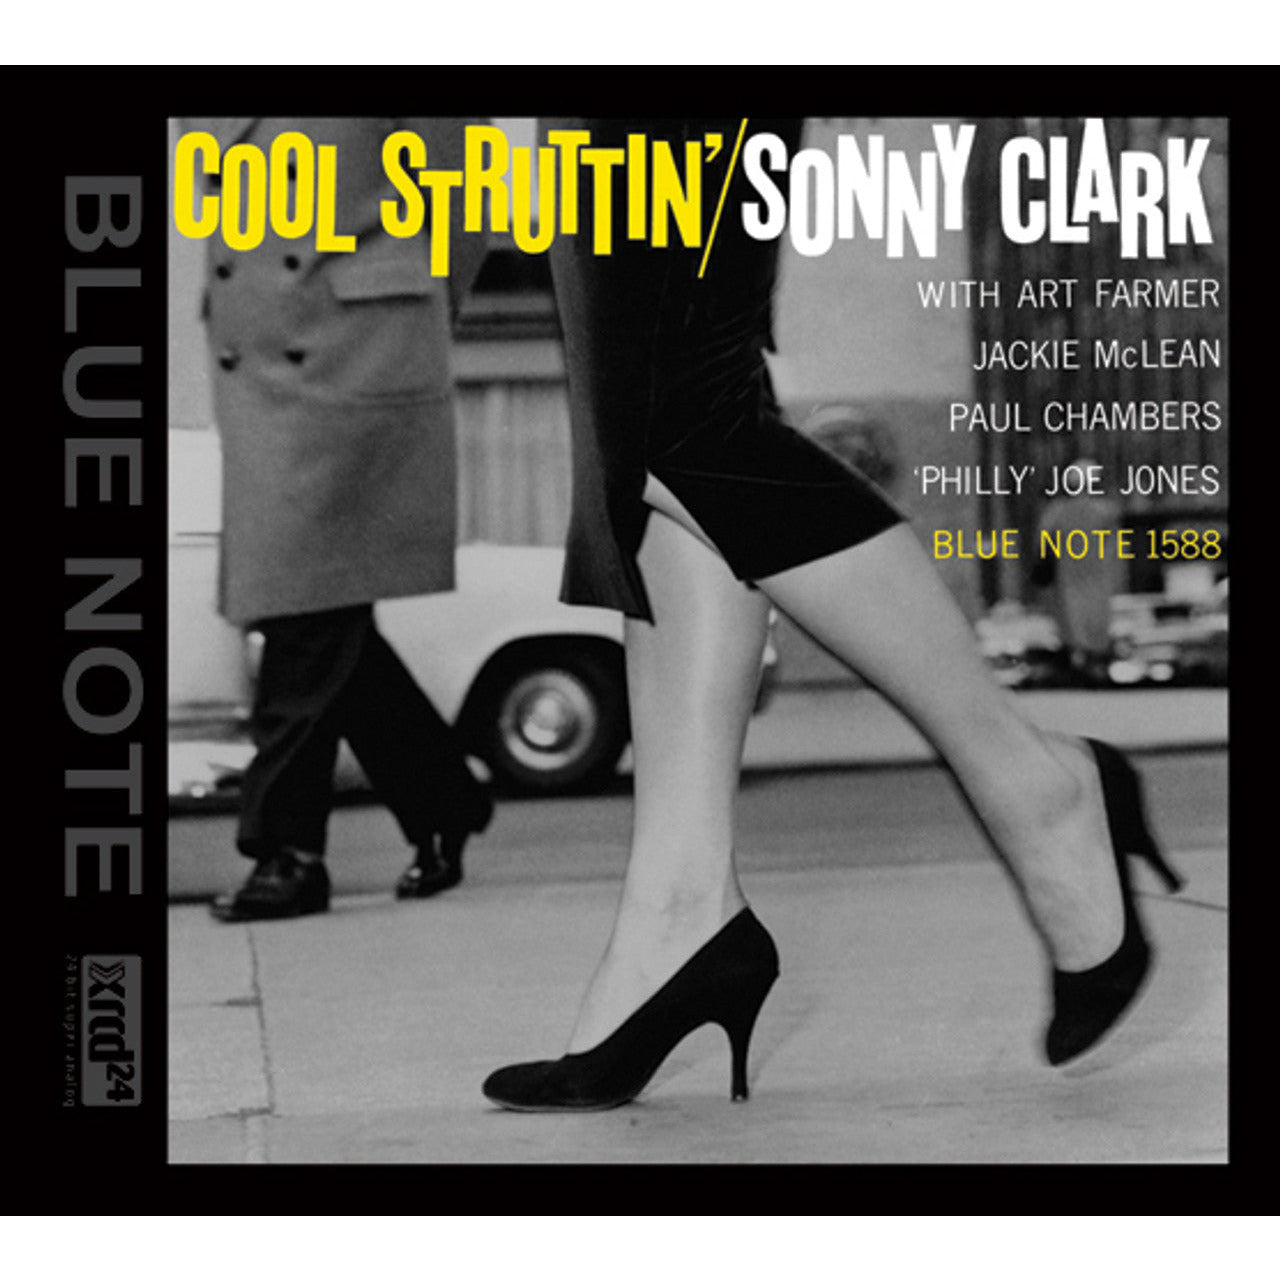 Sonny Clark - Cool Struttin' XRCD24 CD